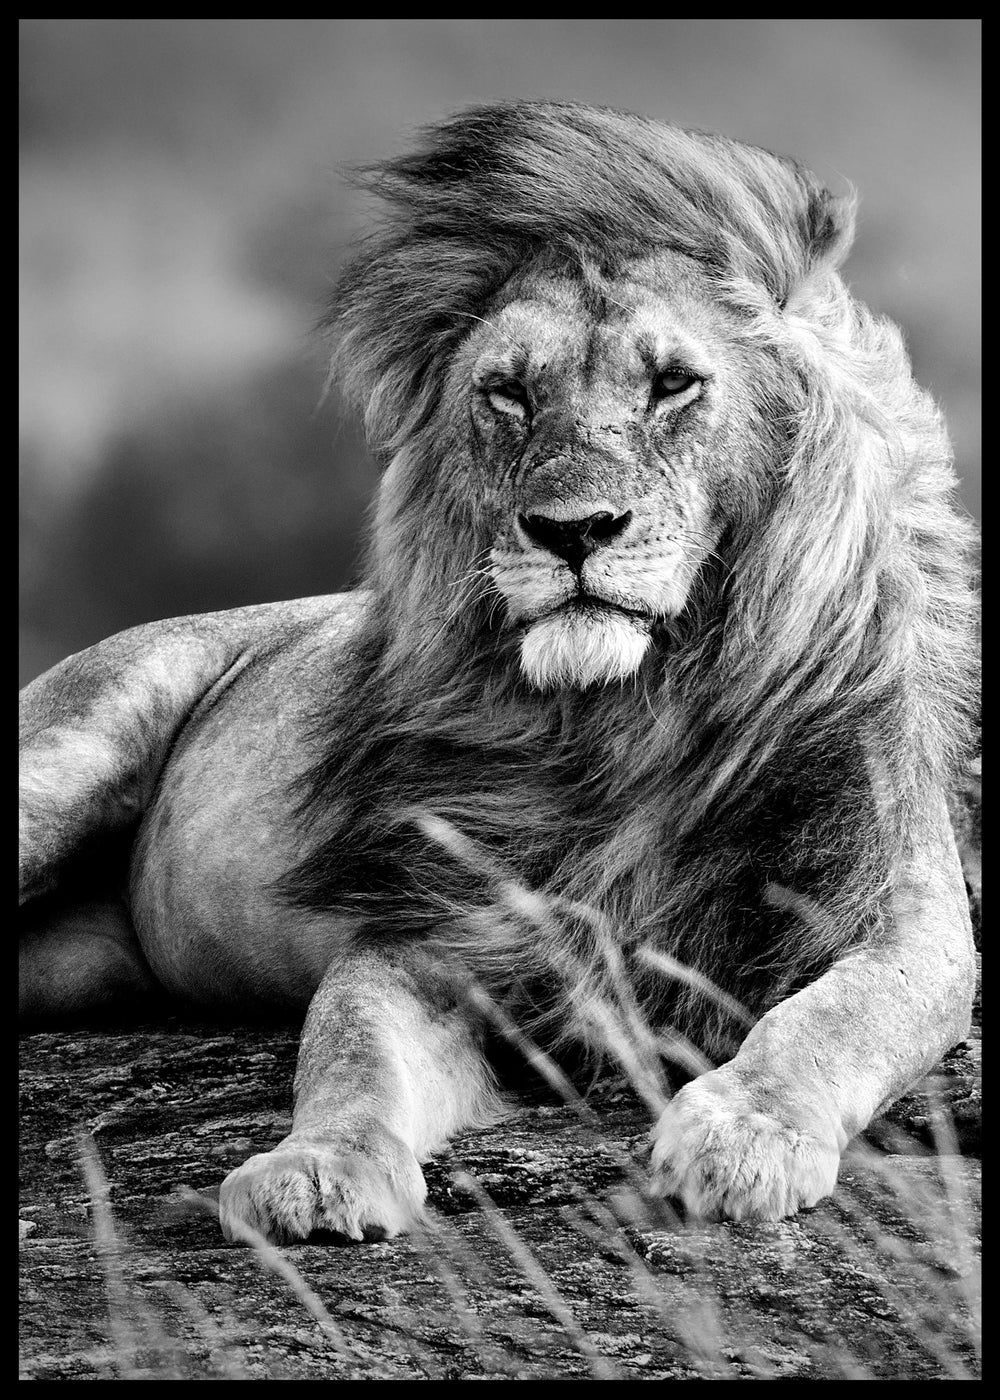 Black & White Lion Photographic Print - Powerful and Elegant